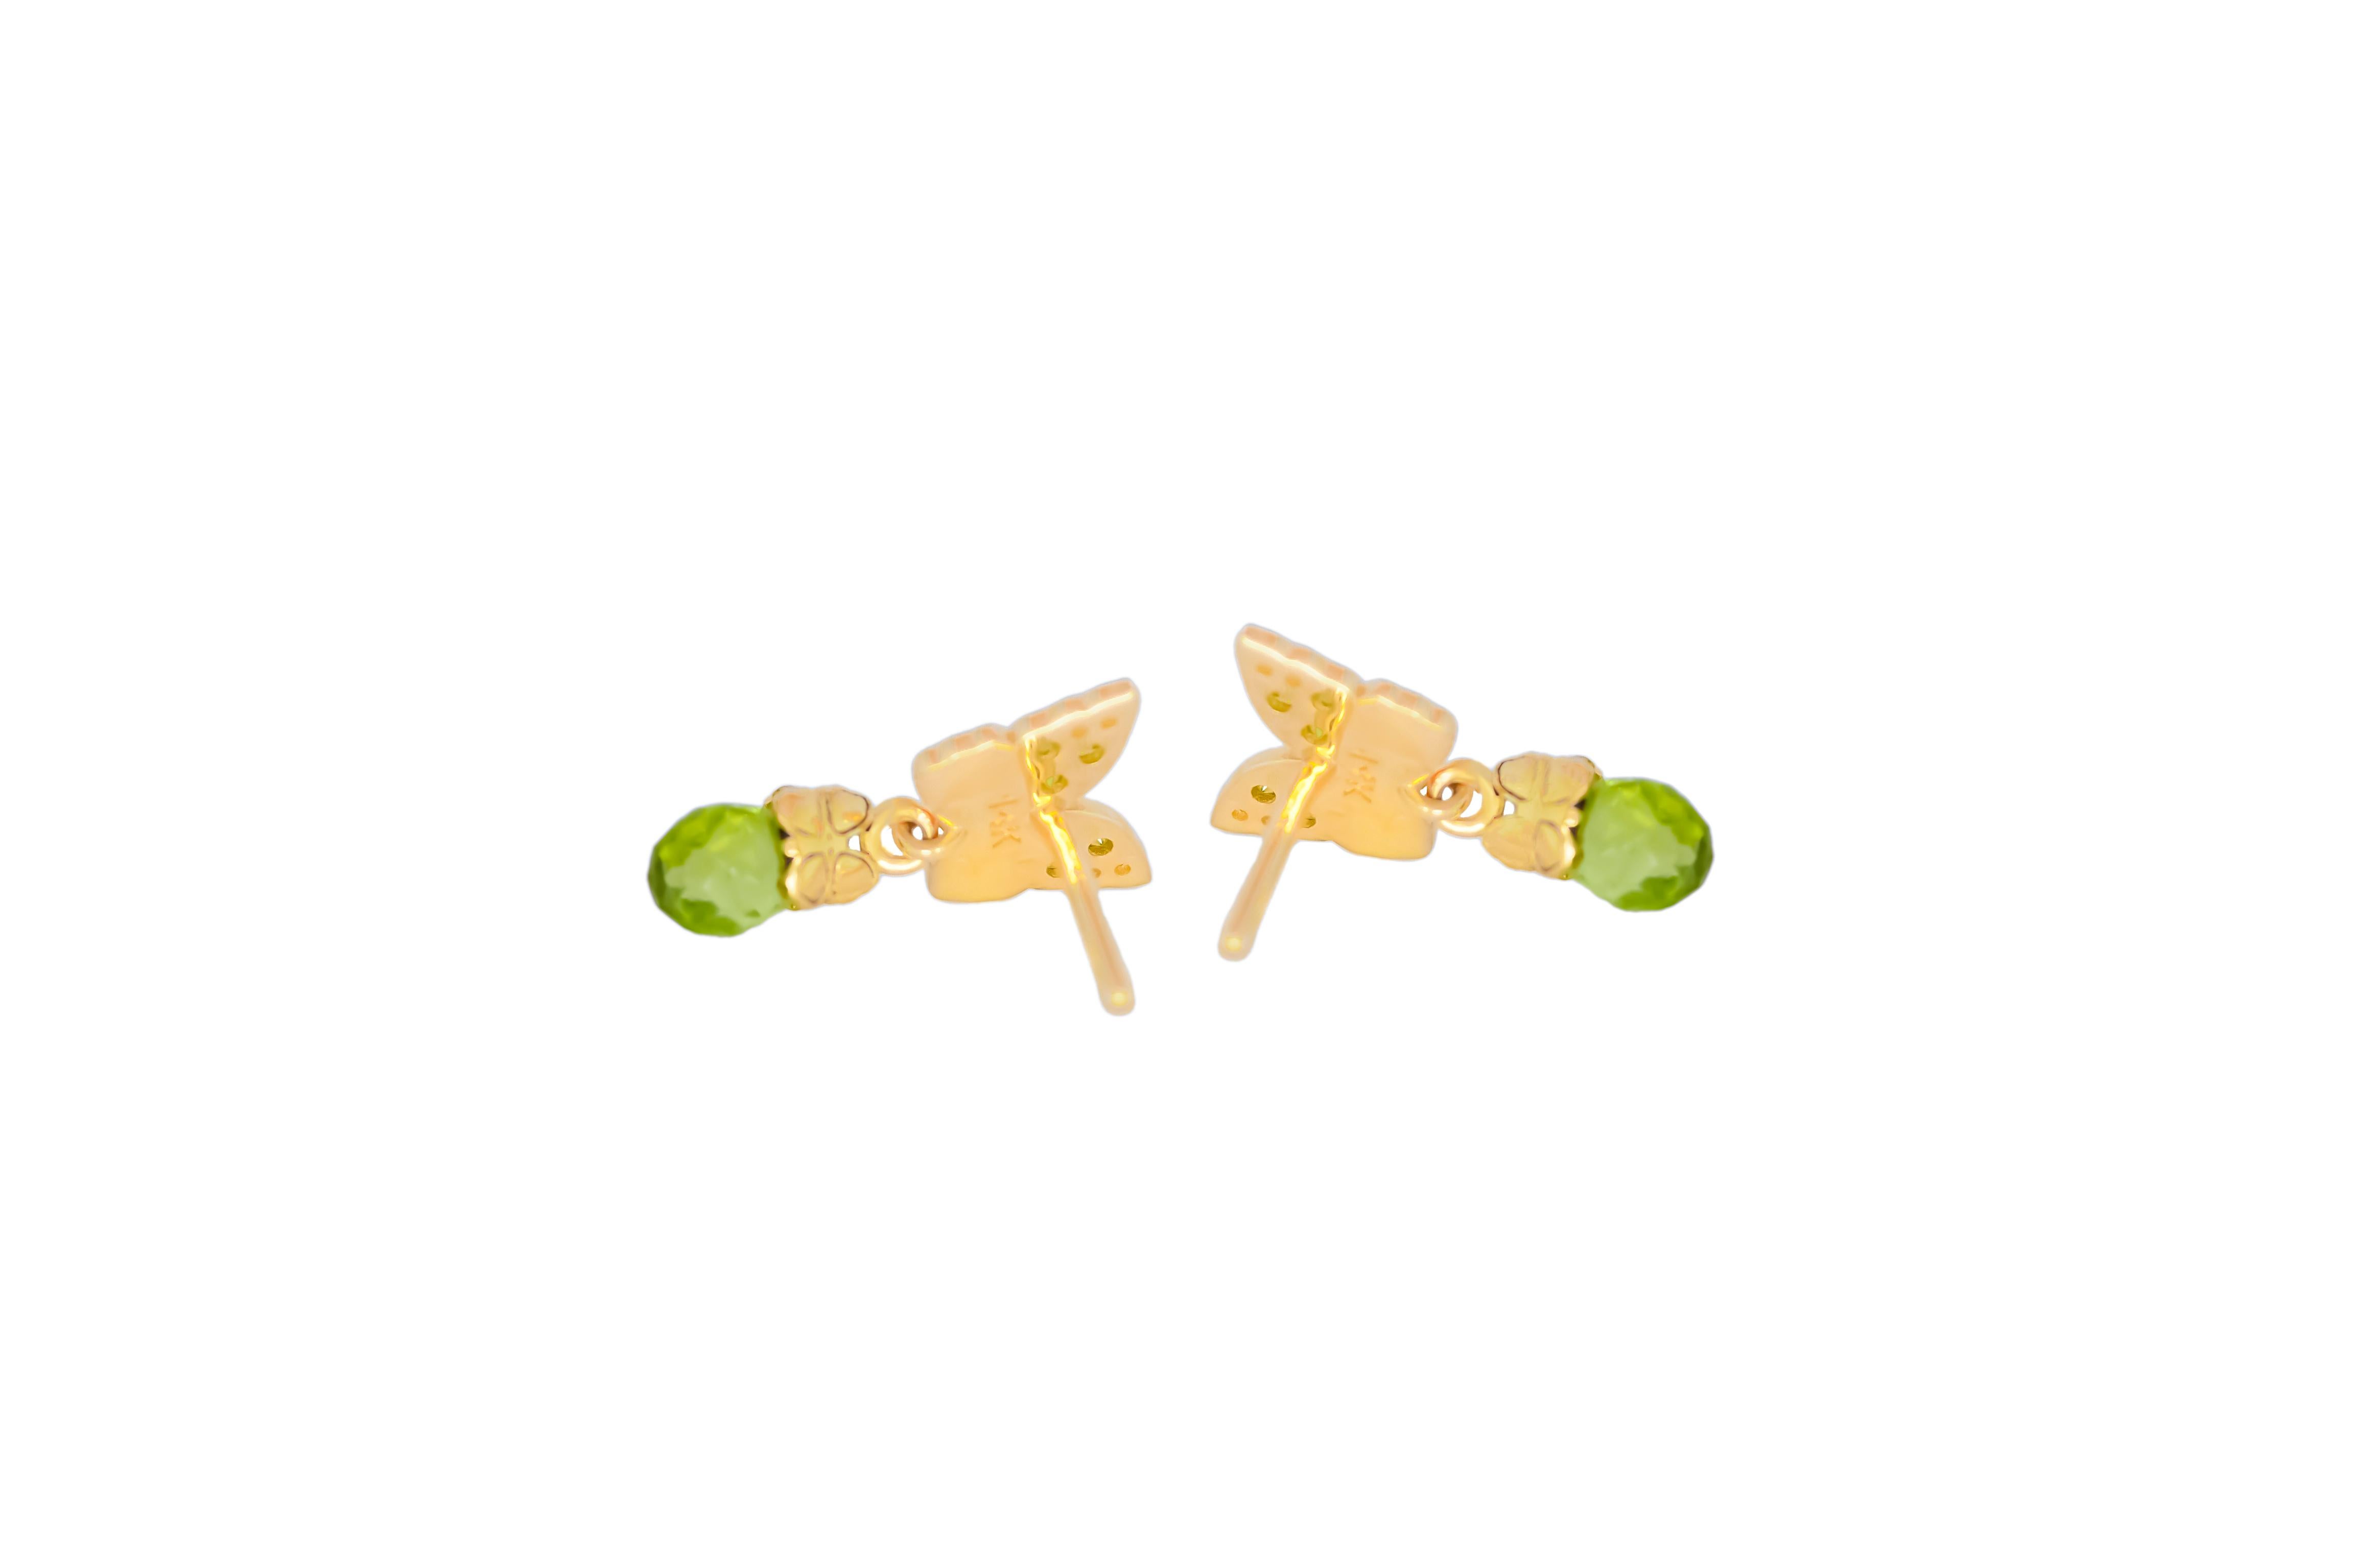 Briolette Cut Butterfly 14k gold earrings with peridot briolettes.  For Sale